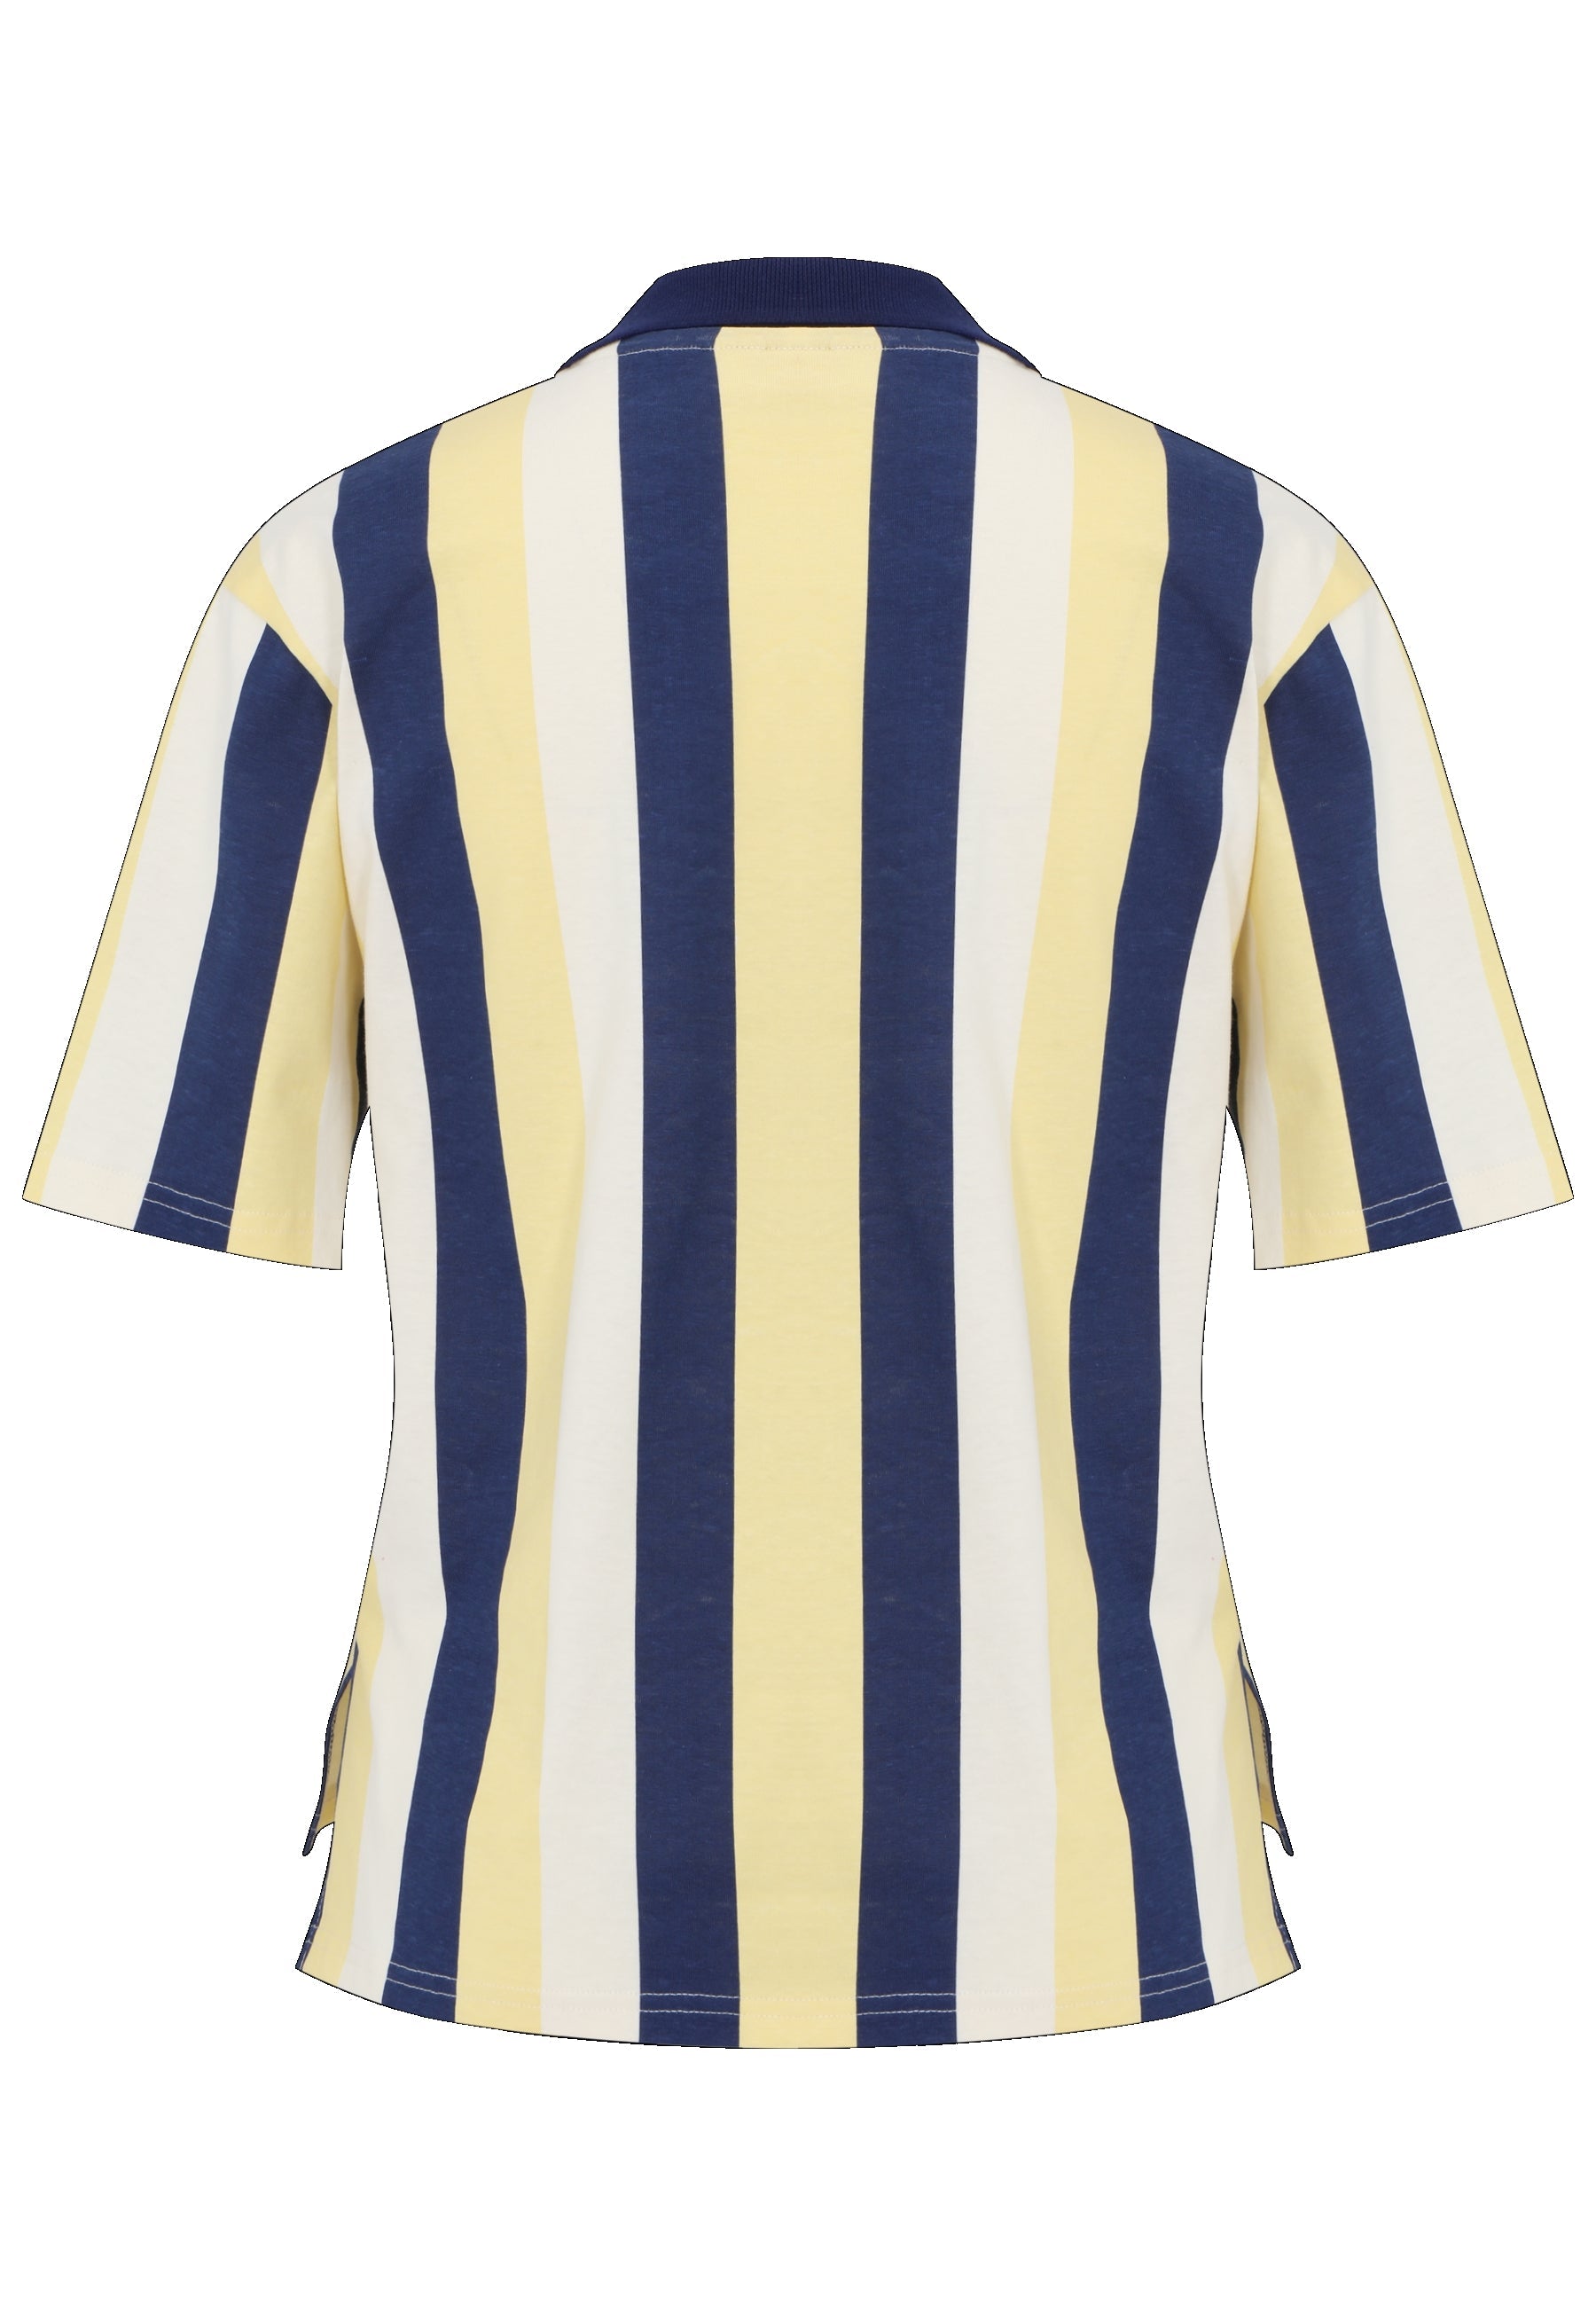 Themar Striped Polo Shirt in Pale Banana Bold Striped Polos Fila   